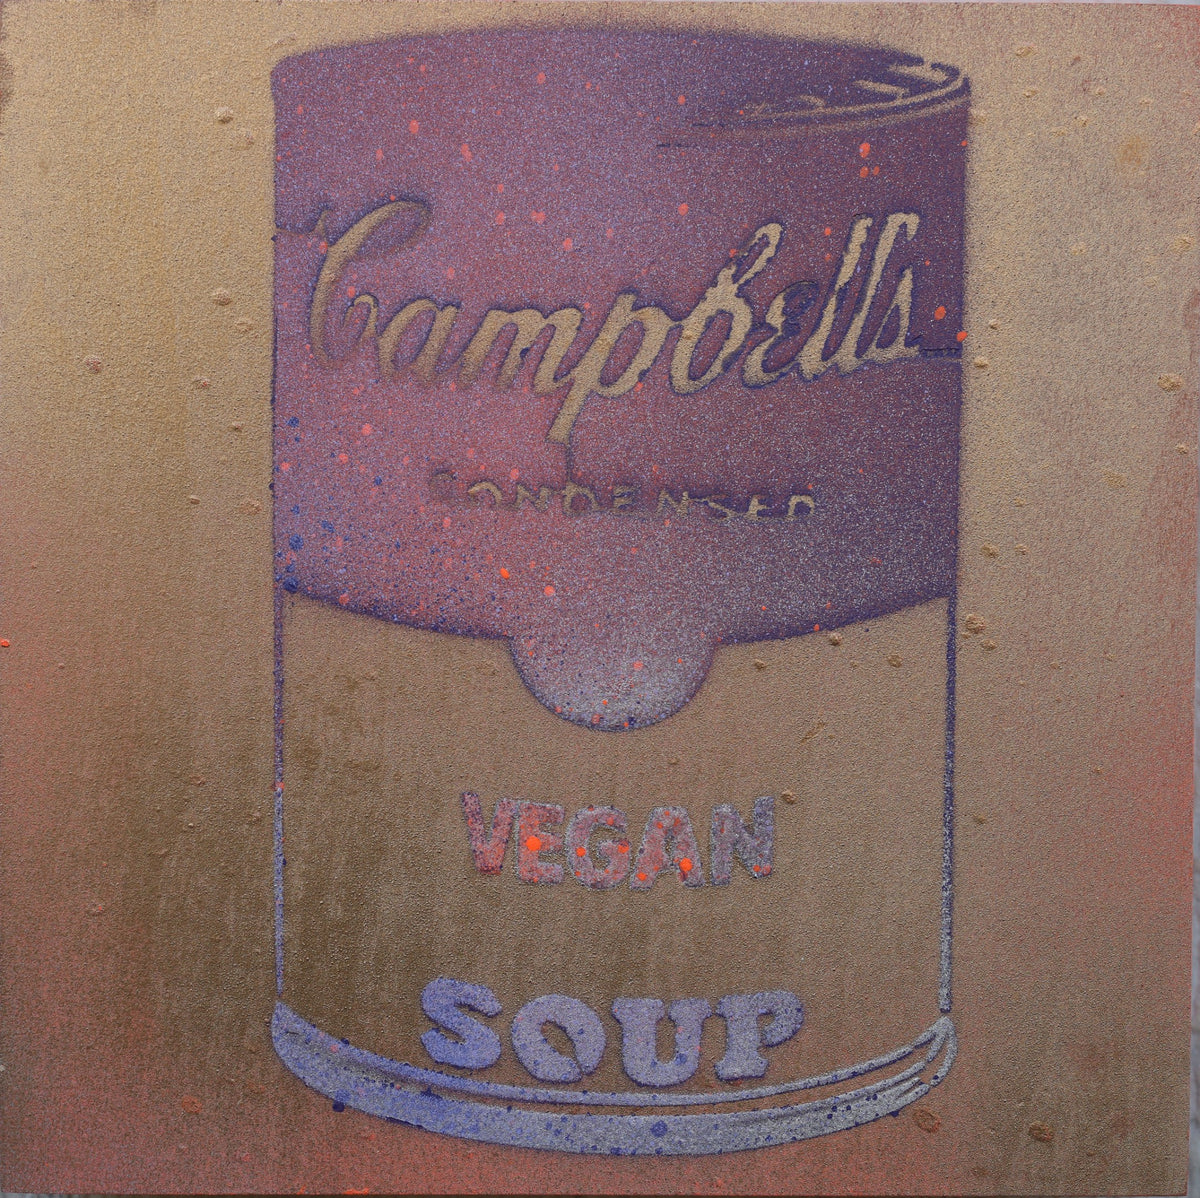 Vegan Soup Blue & Light Metal Graffiti on Wood and Resin 8x8